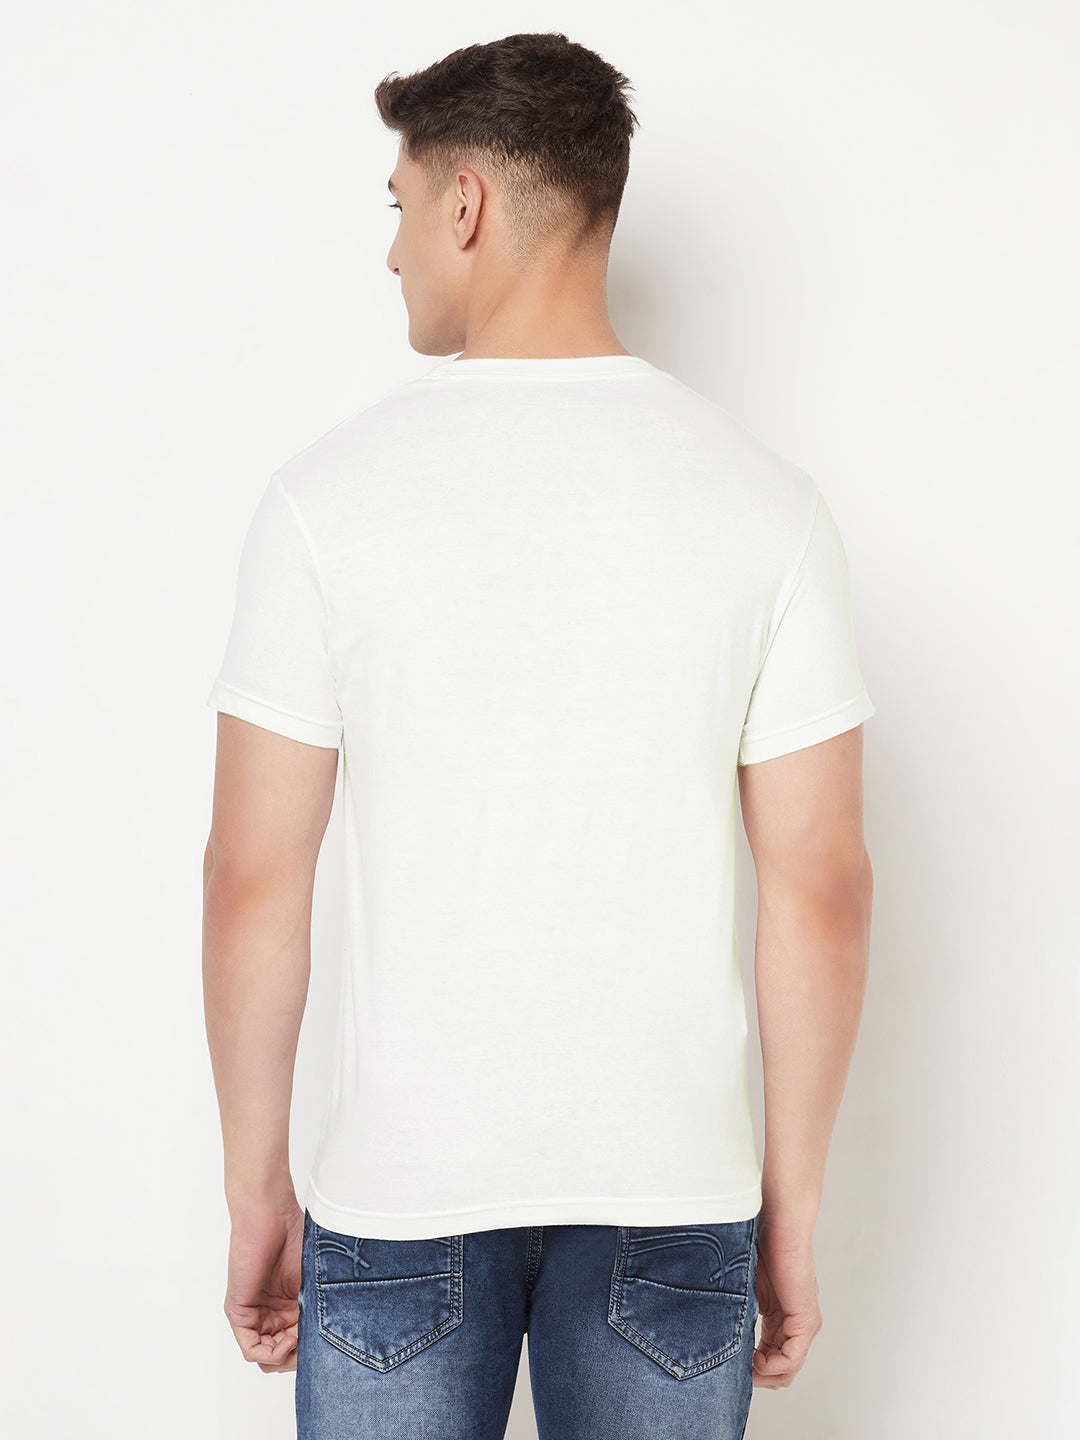 Premium Cotton Tshirts  (Pack of 2- White,Black)